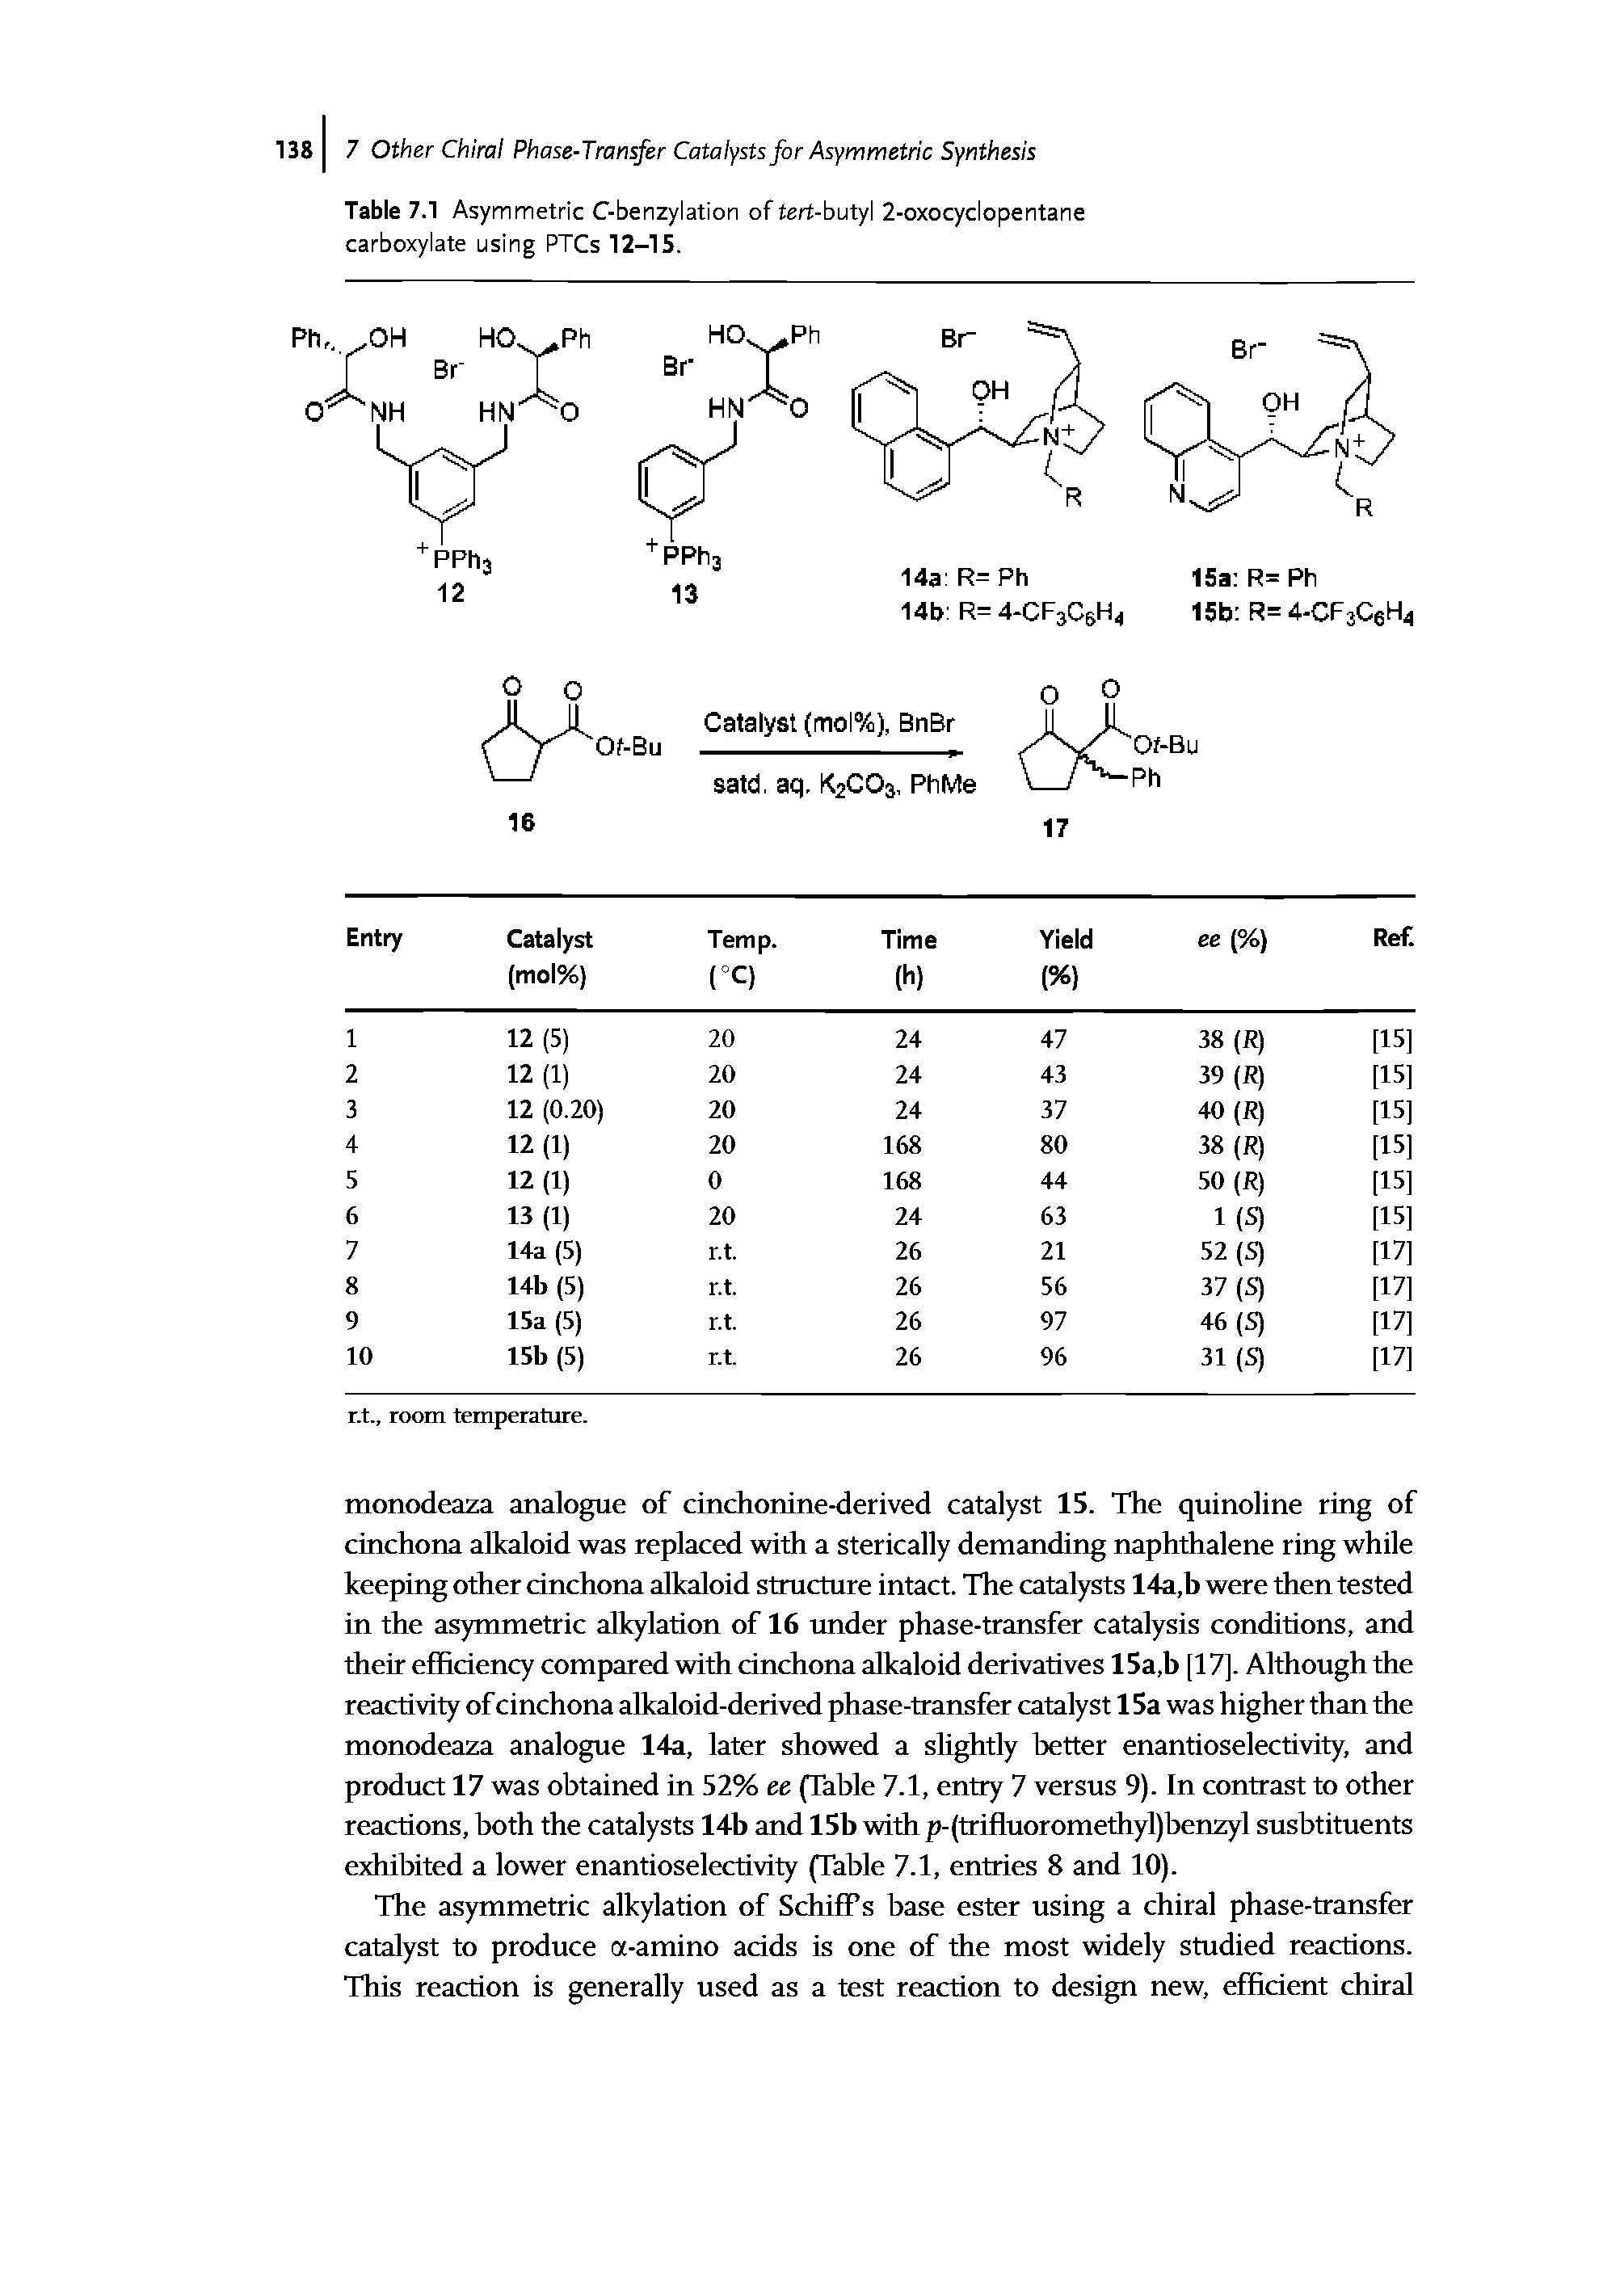 Table 7.1 Asymmetric C-benzylation of tert-butyl 2-oxocyclopentane carboxylate using PTCs 12-15.